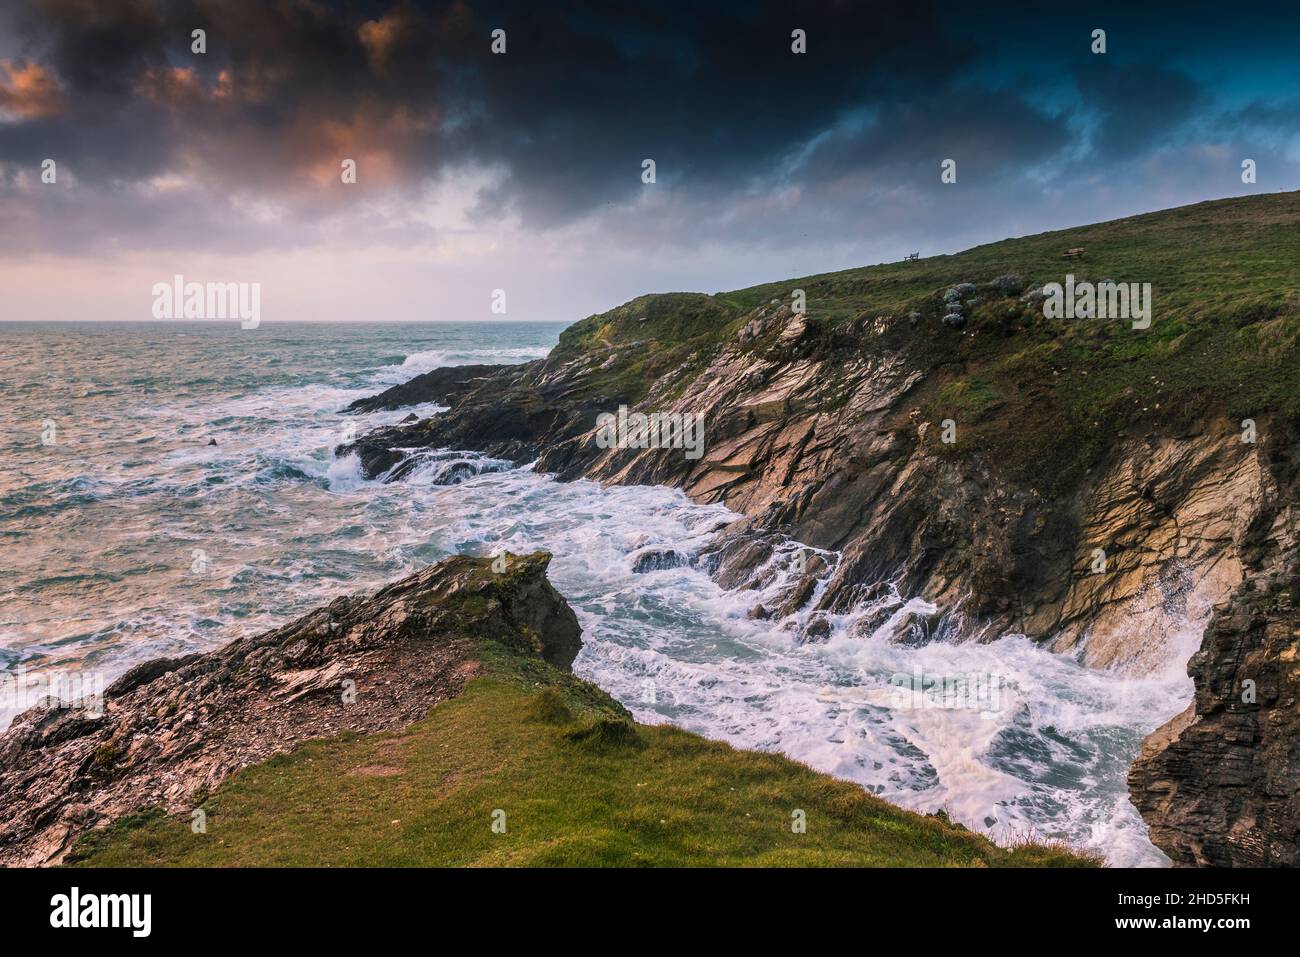 The wild rocky coastline around Towan Head in Newquay in Cornwall. Stock Photo